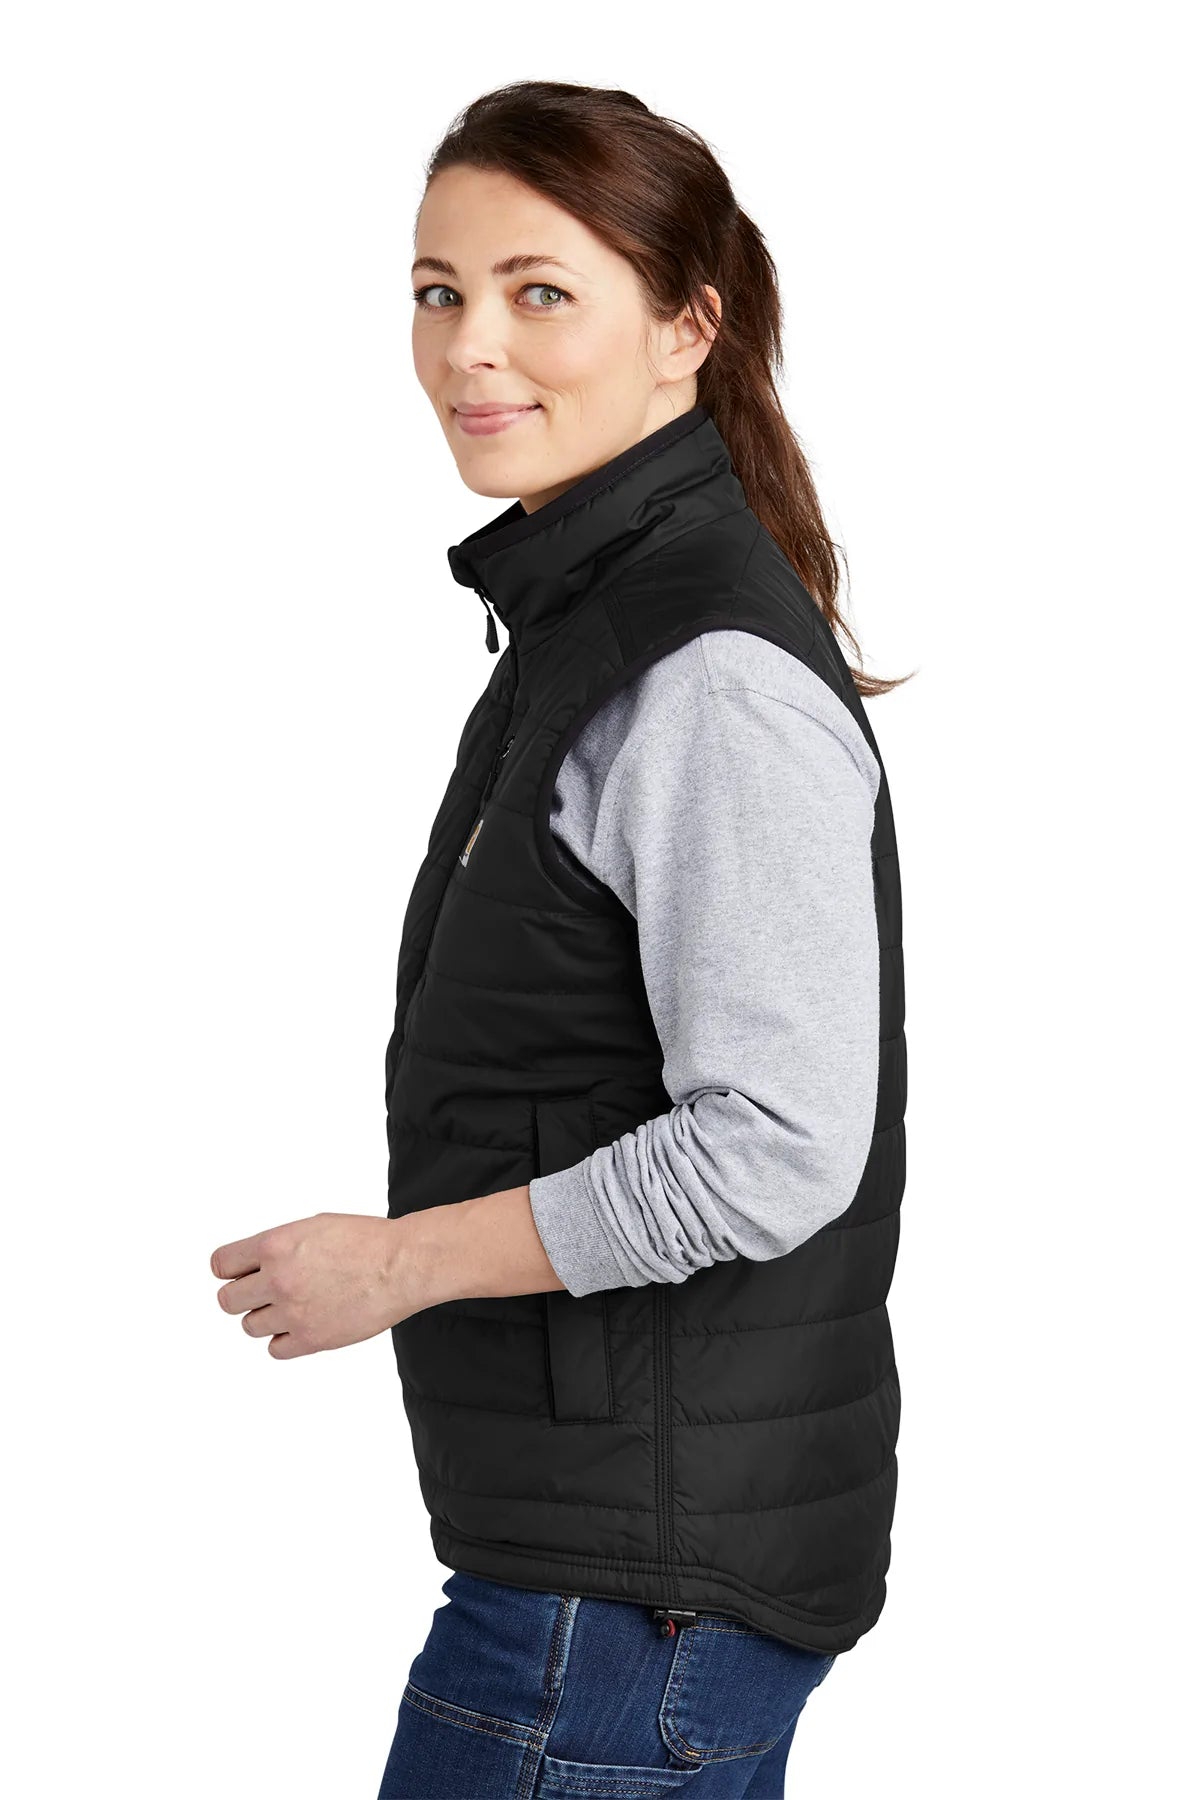 Carhartt Womens Gilliam Customized Vests, Black